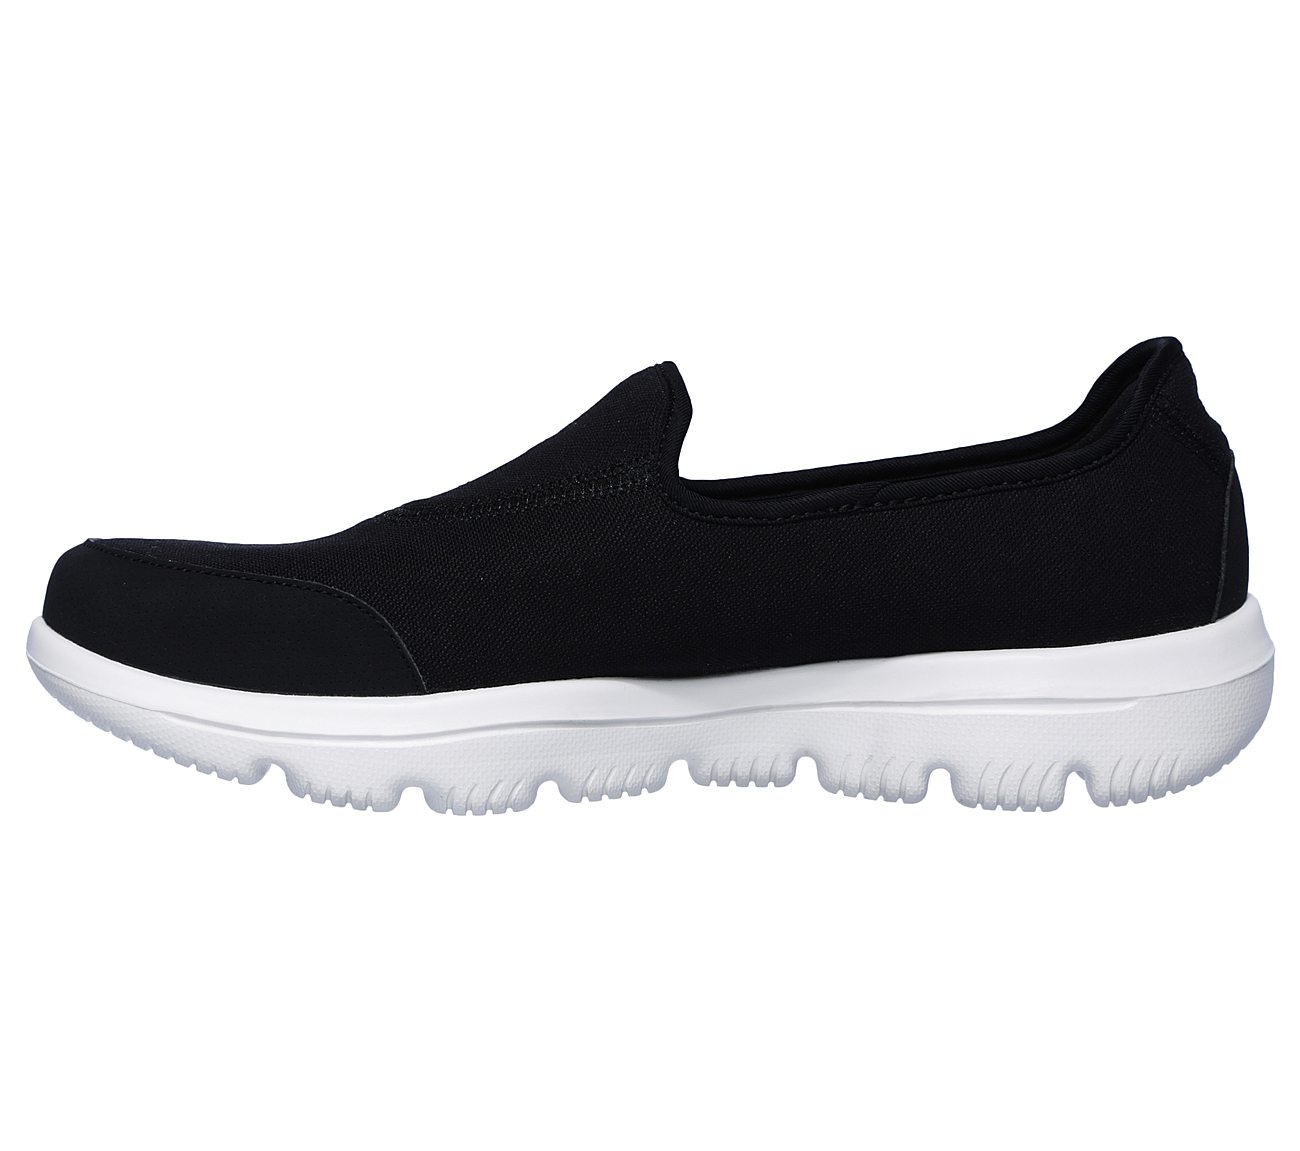 GO WALK EVOLUTION ULTRA-LEGAC, BLACK/WHITE Footwear Left View